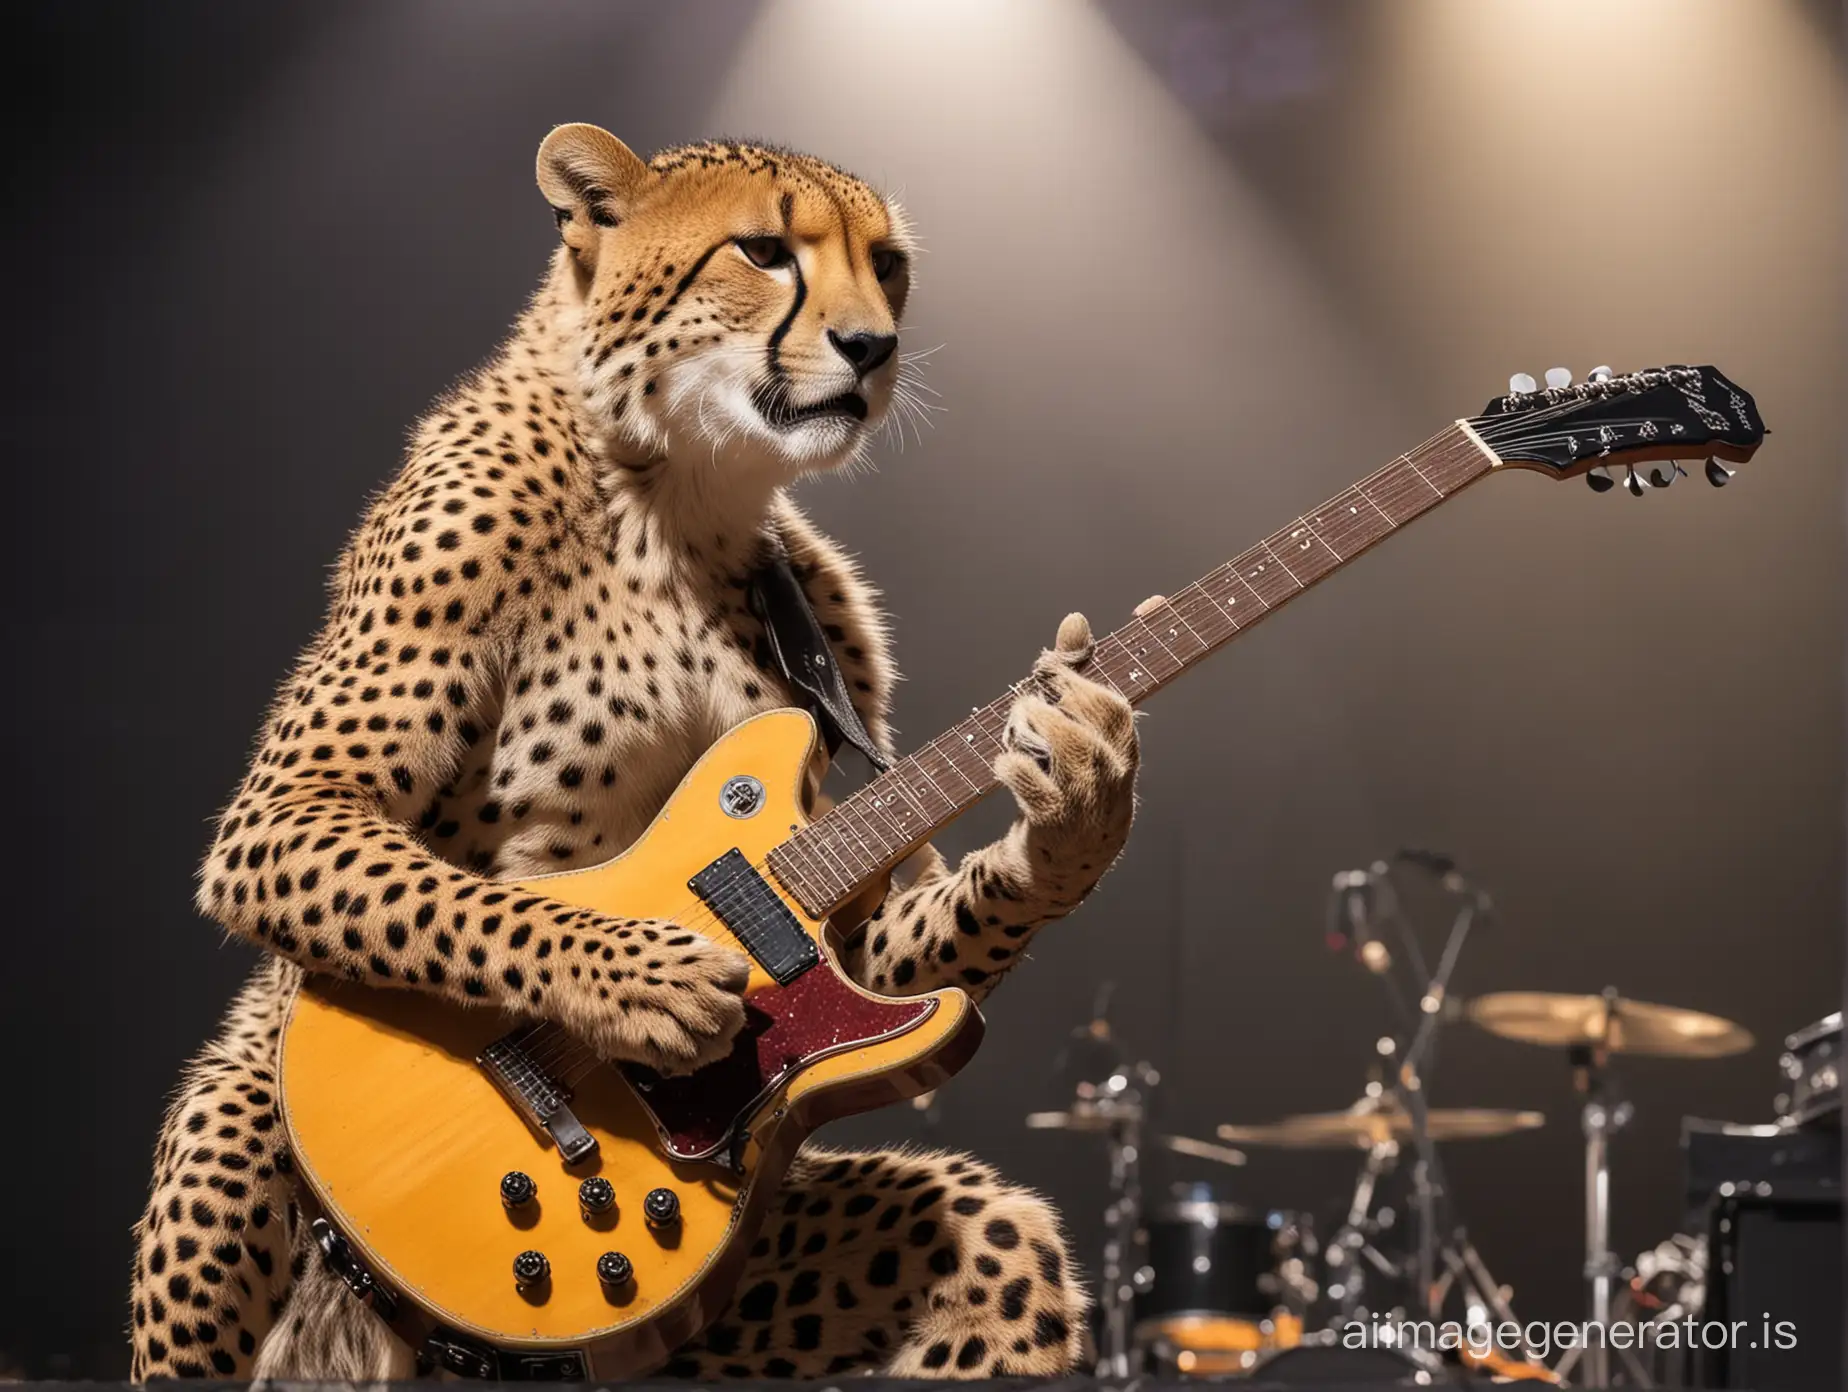 Cheetah-Rockstar-Performing-Live-on-Stage